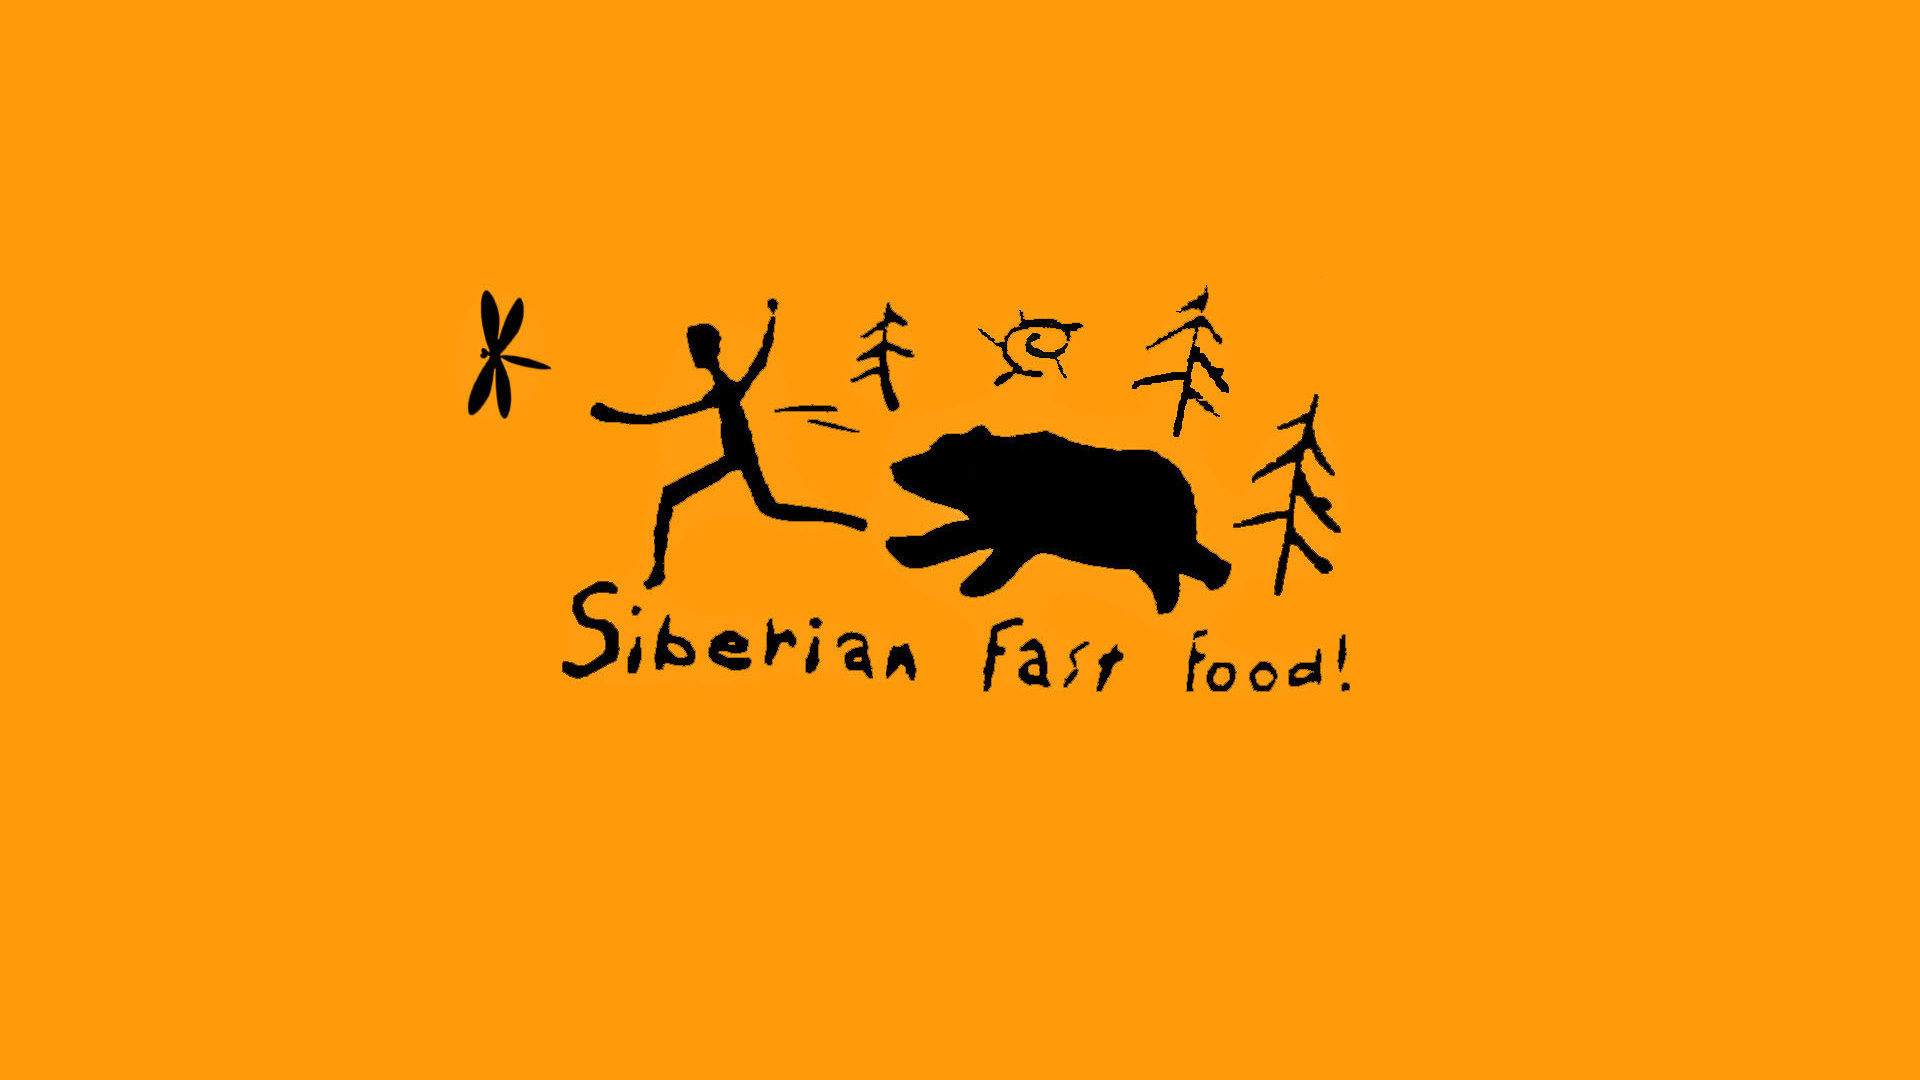 _Fast_food_in_Siberia_088679_.jpg